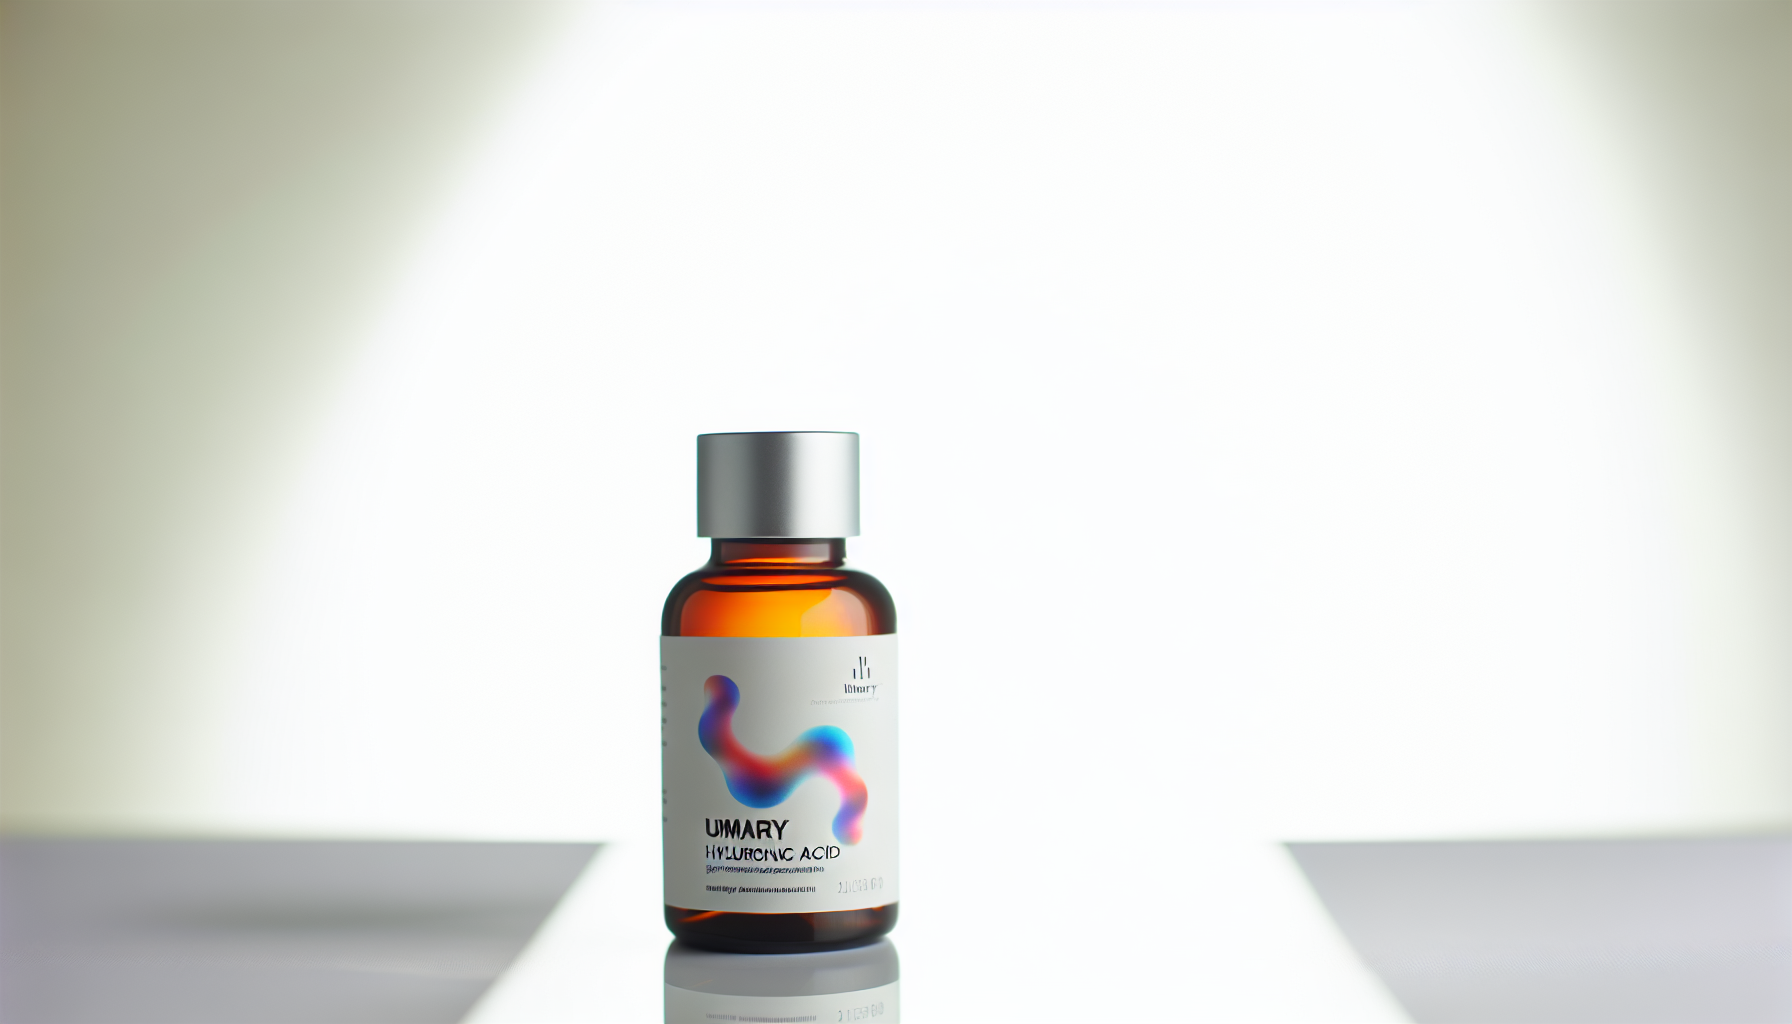 Bottle of UMARY Hyaluronic Acid supplement